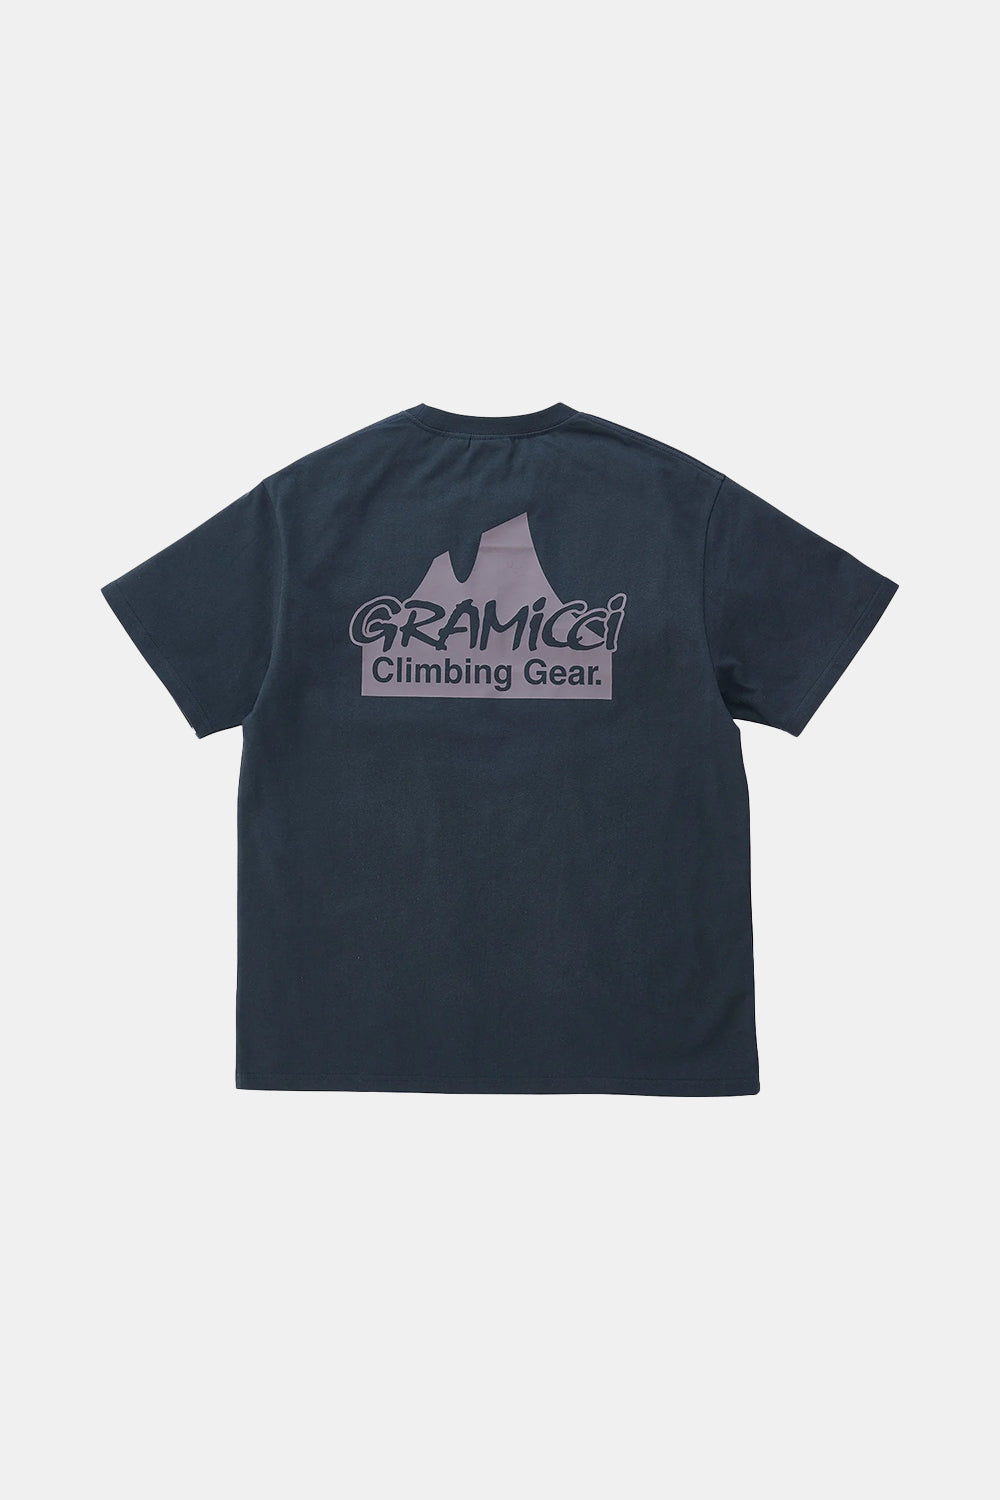 Gramicci Climbing Gear T-Shirt (Vintage Black)